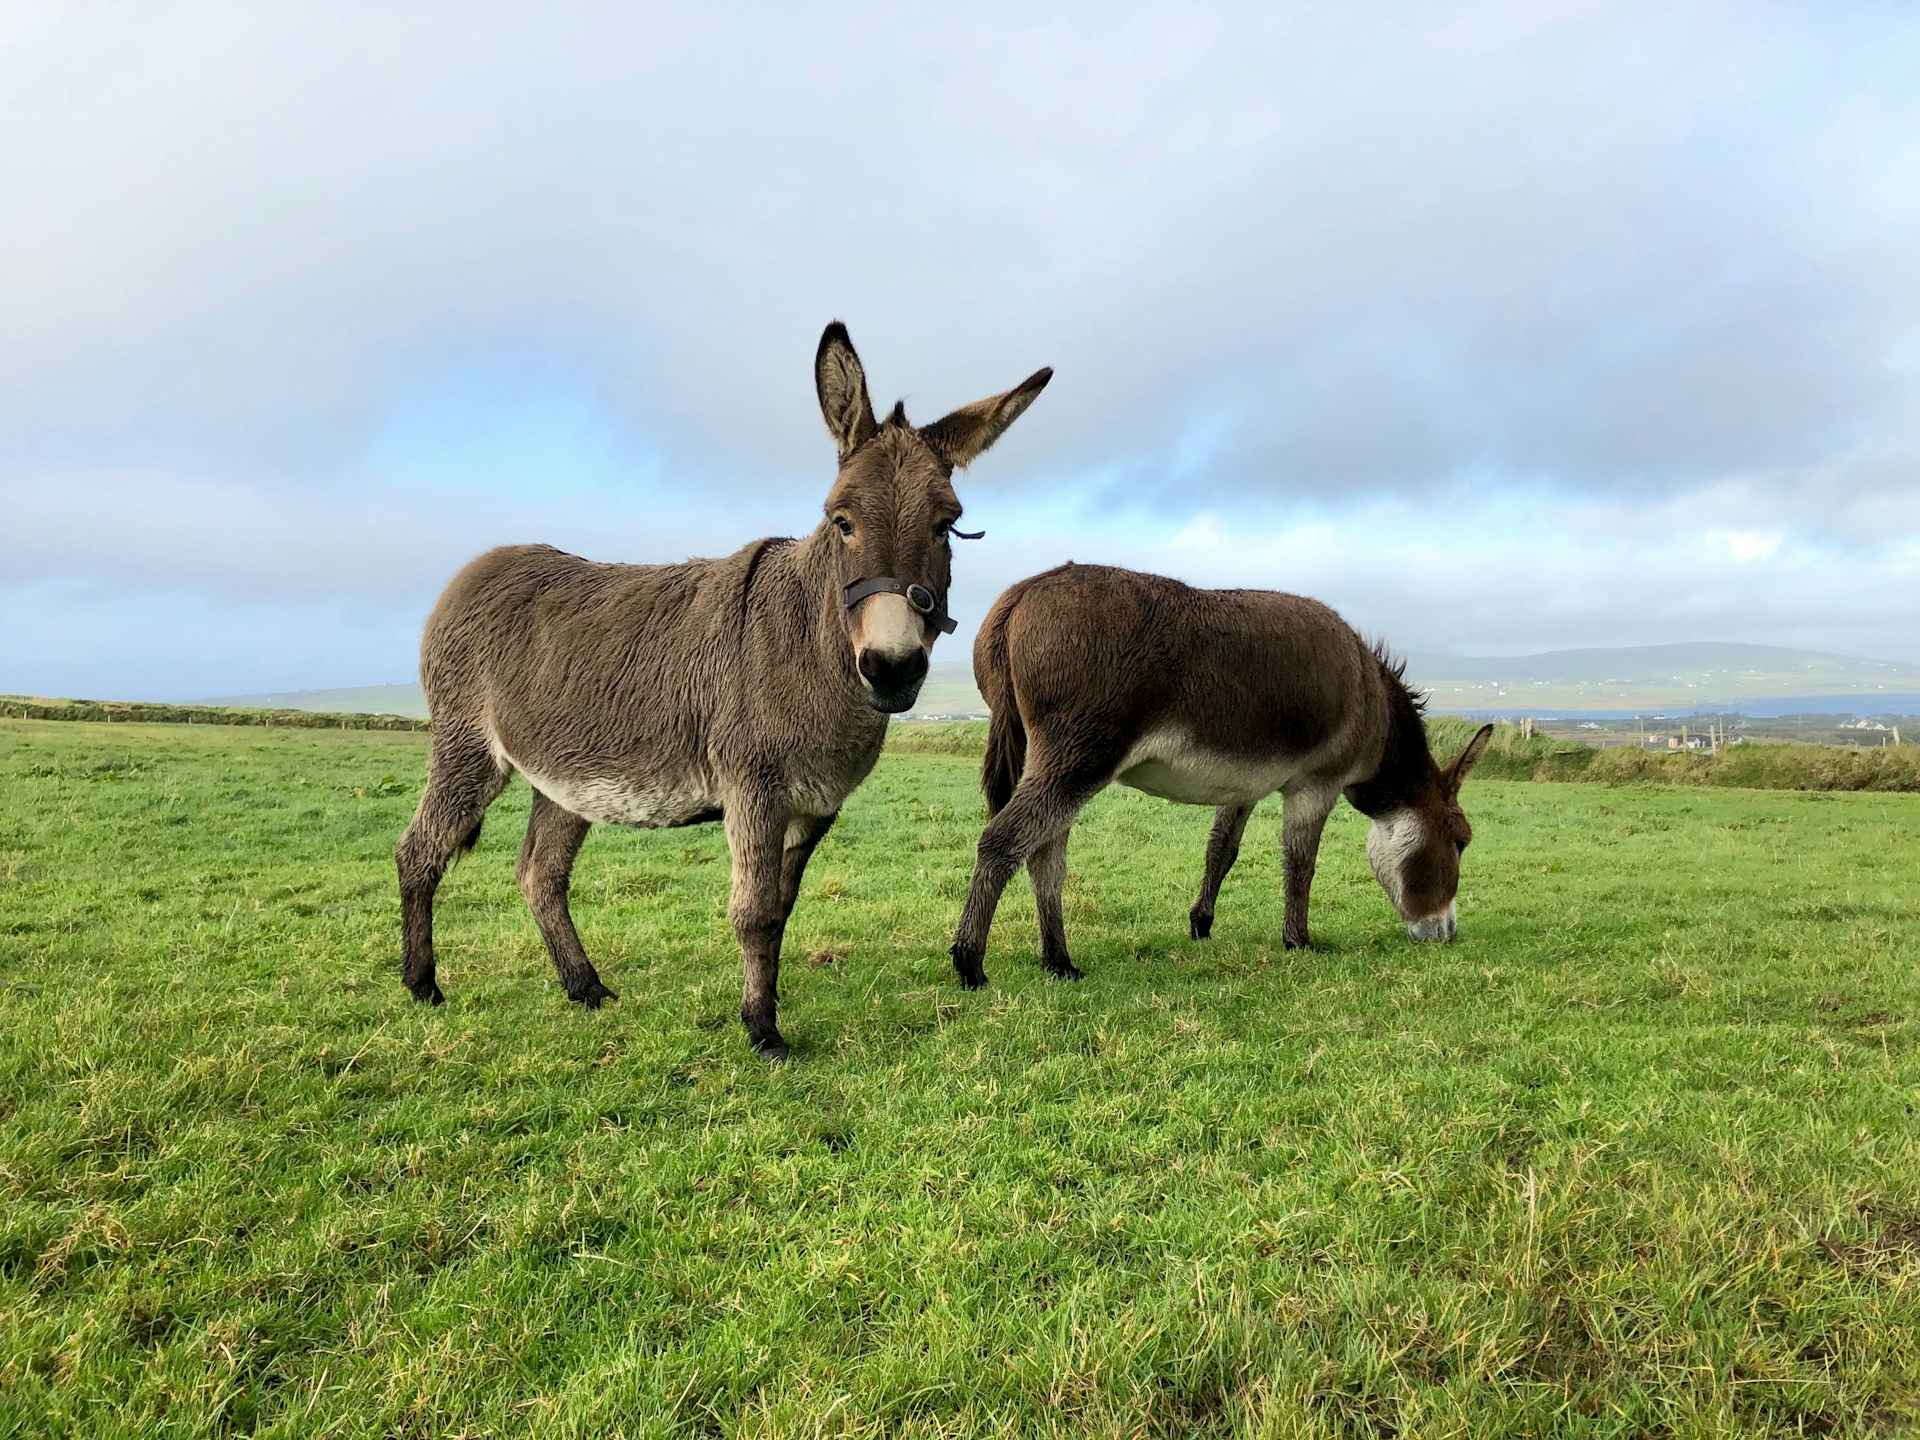 2 miniature donkeys looking at the camera